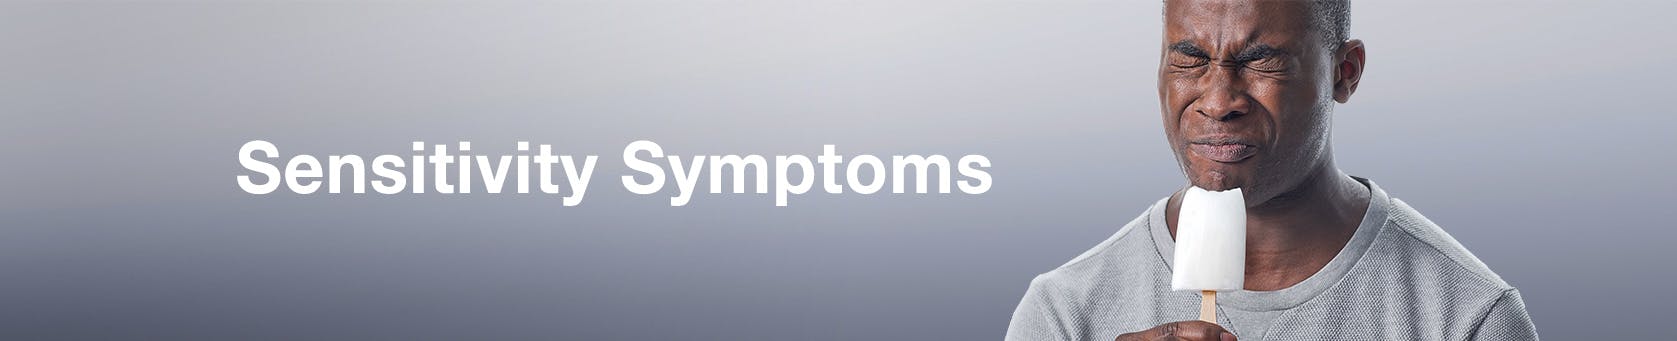 Symptoms of Sensitivity